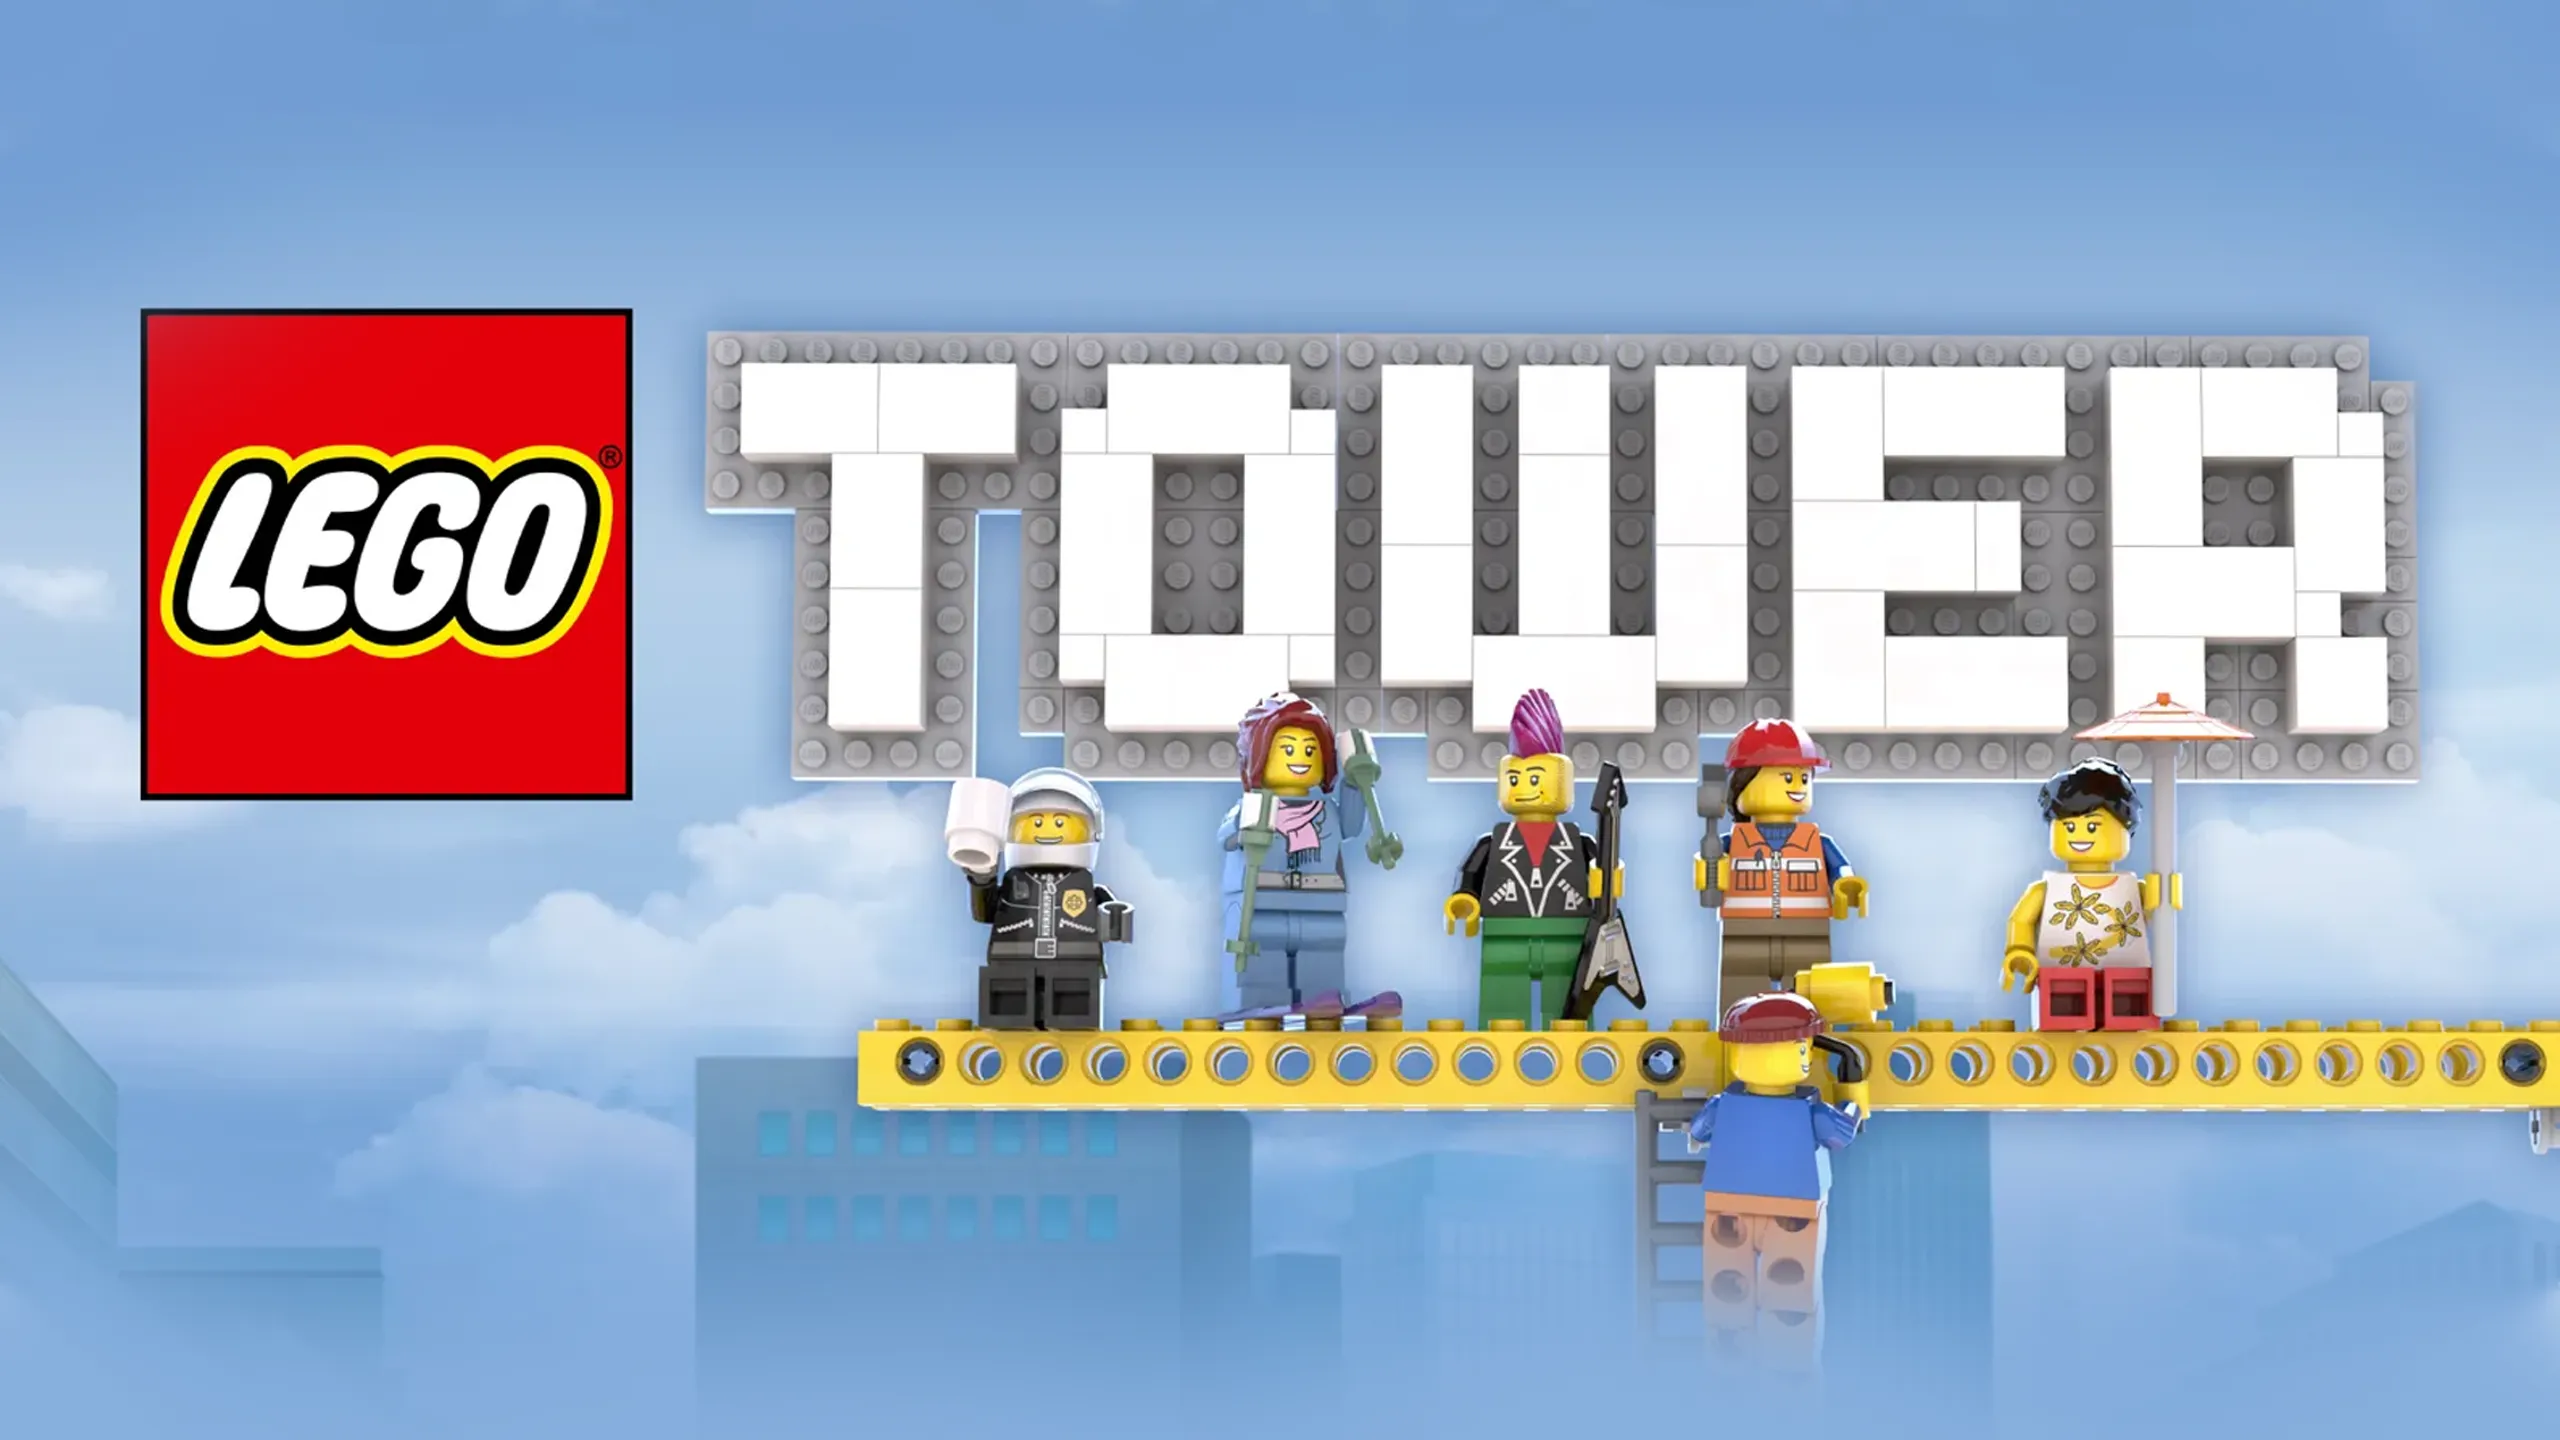 LEGO Tower image Primary image